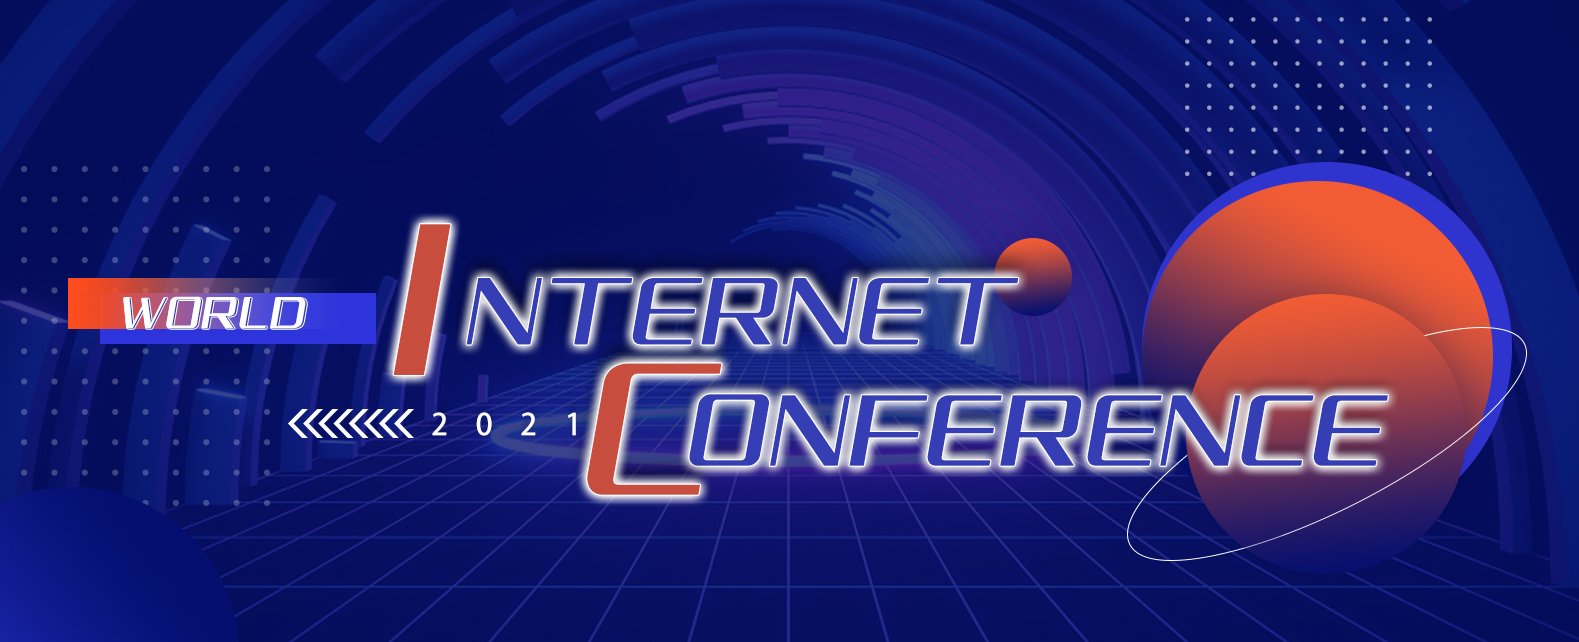 World Internet Conference 2021